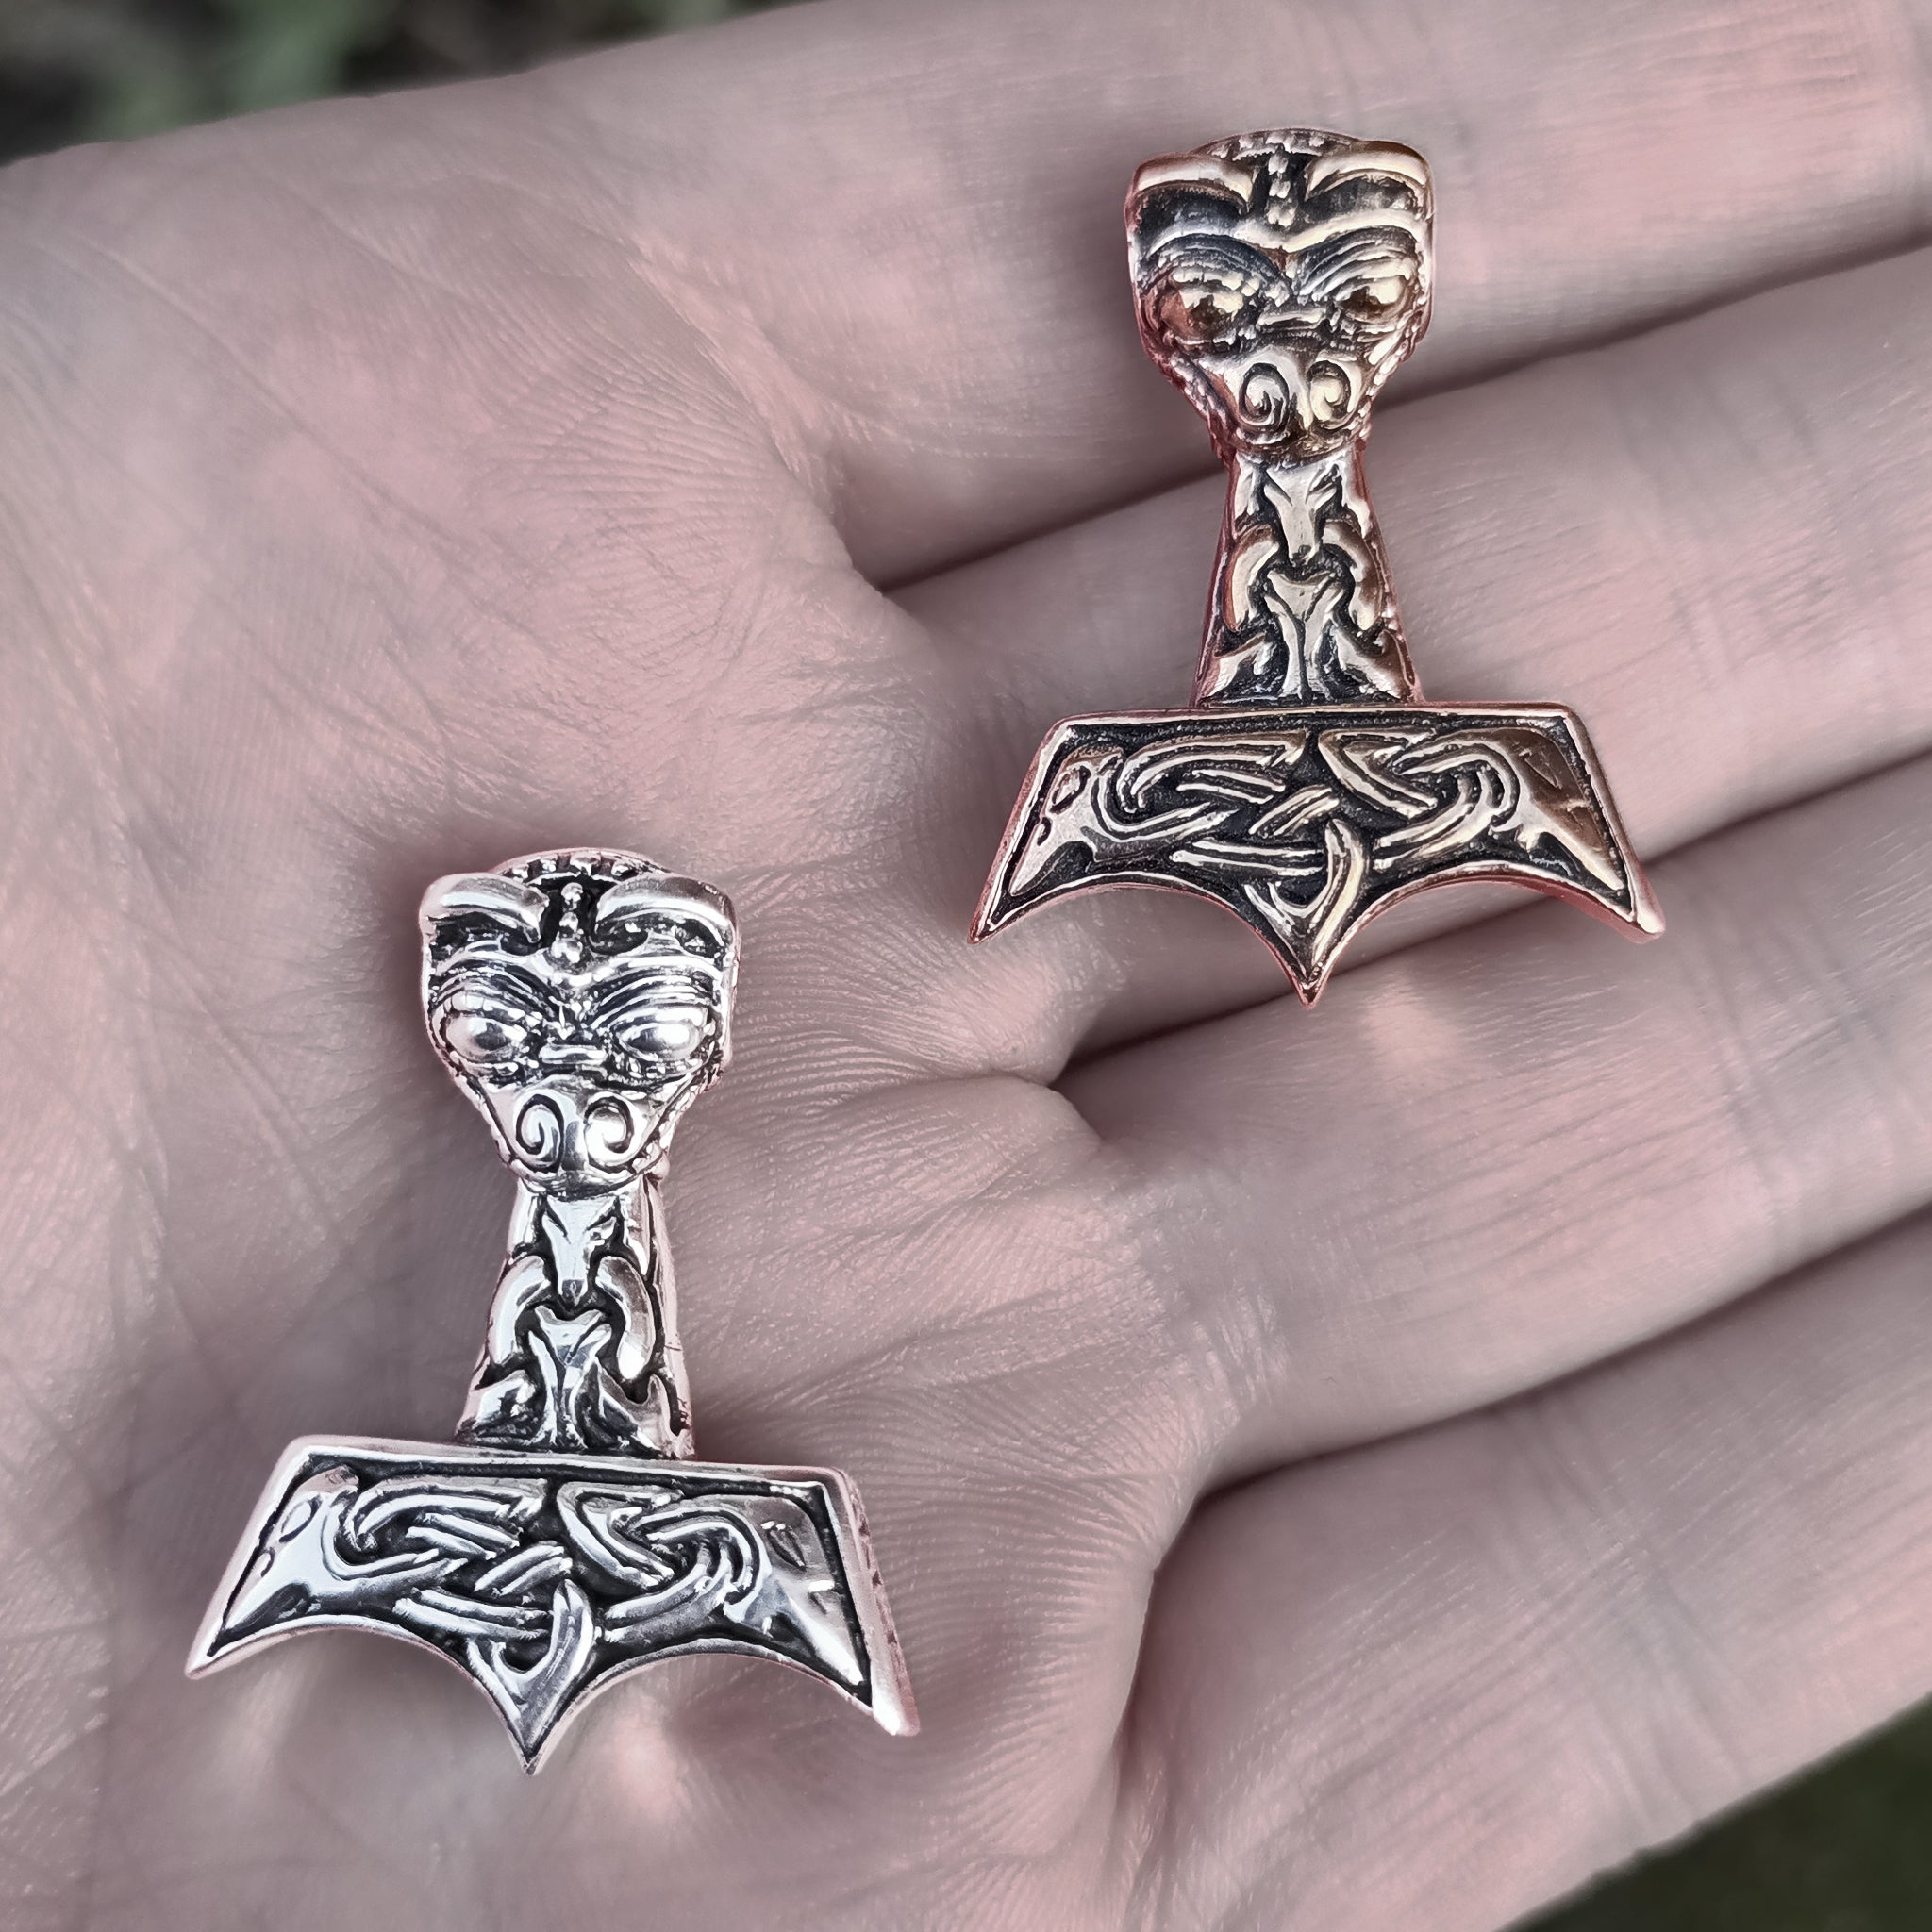 Ferocious Beast Thors Hammer Pendants on Hand - Silver and Bronze